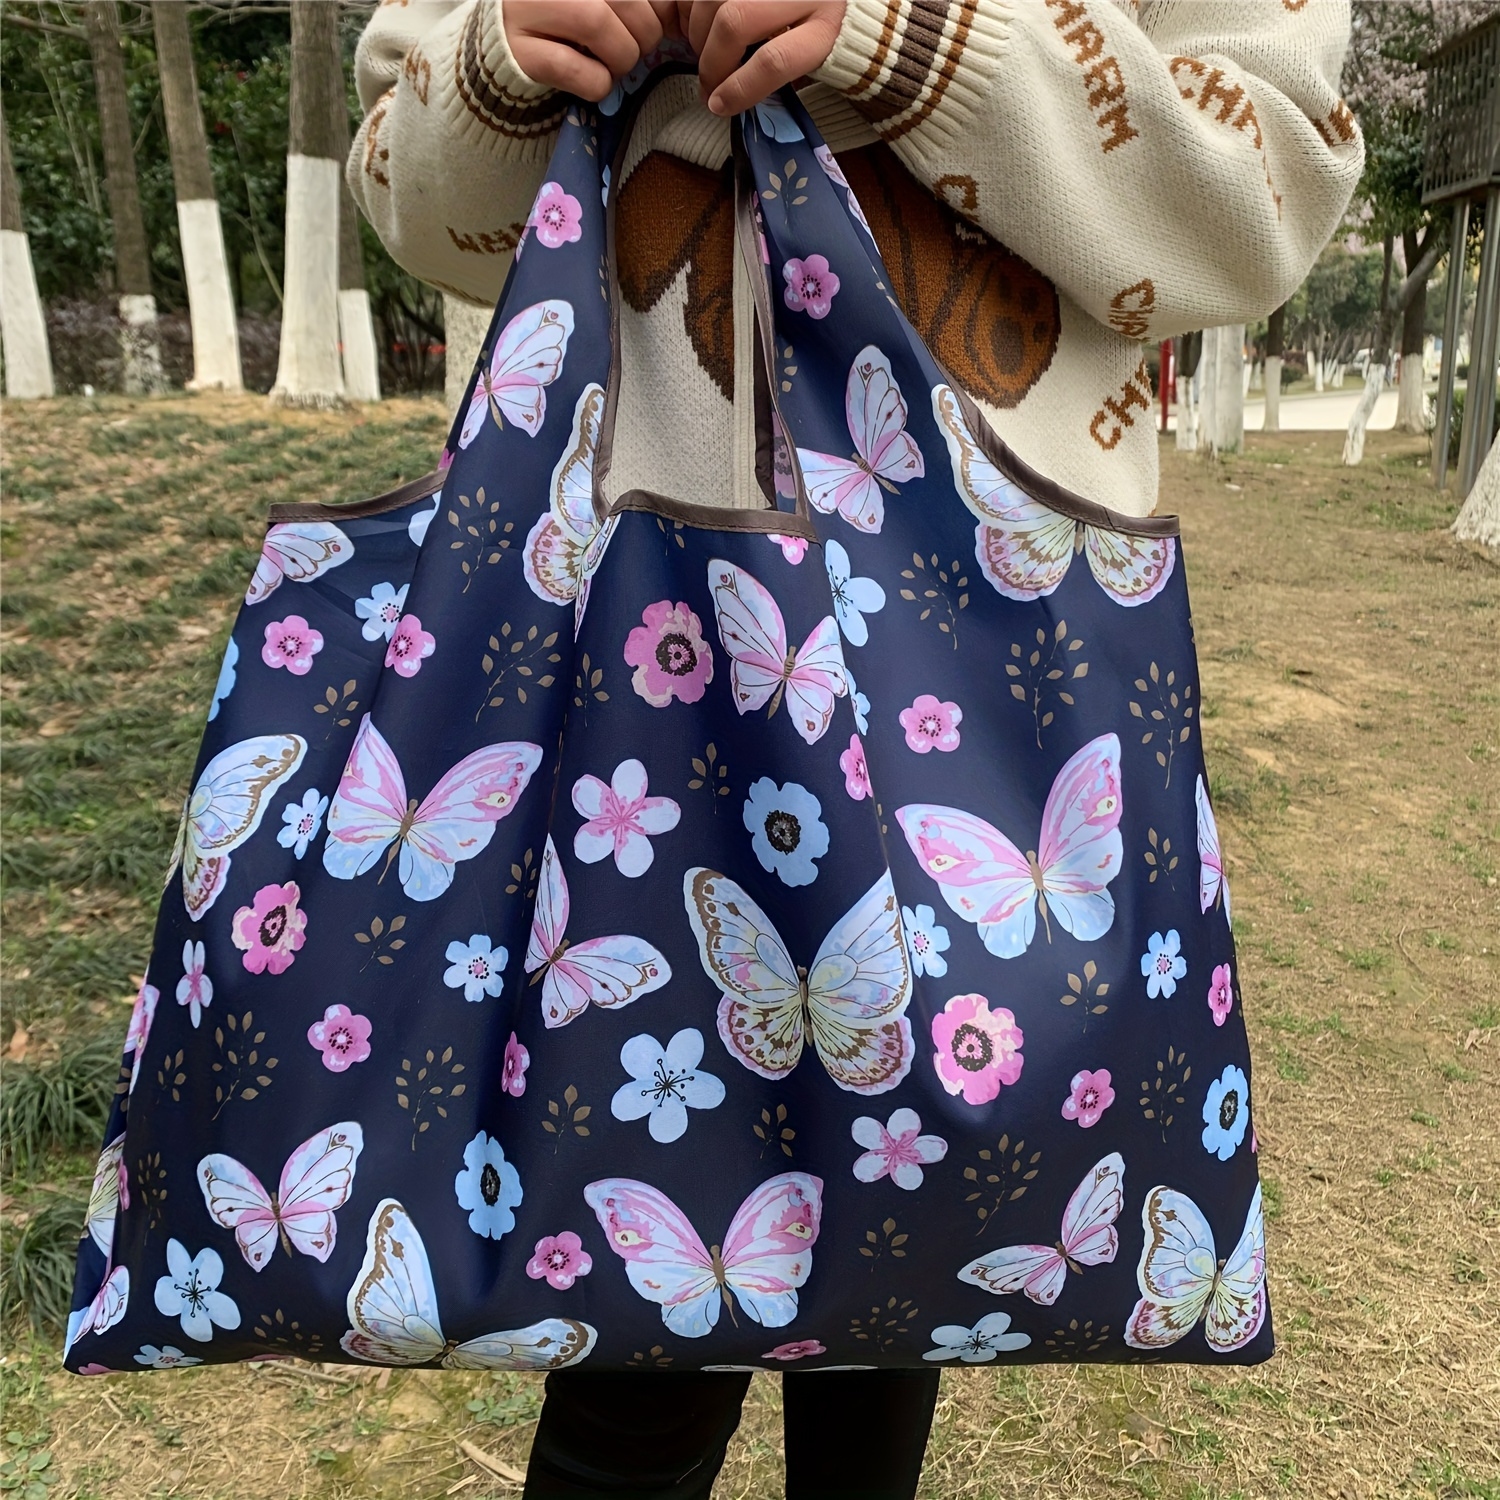 Lolita Star-shaped Shoulder Bag Macaron Girl Handbag Cute Tote Bag Satchel  Gift